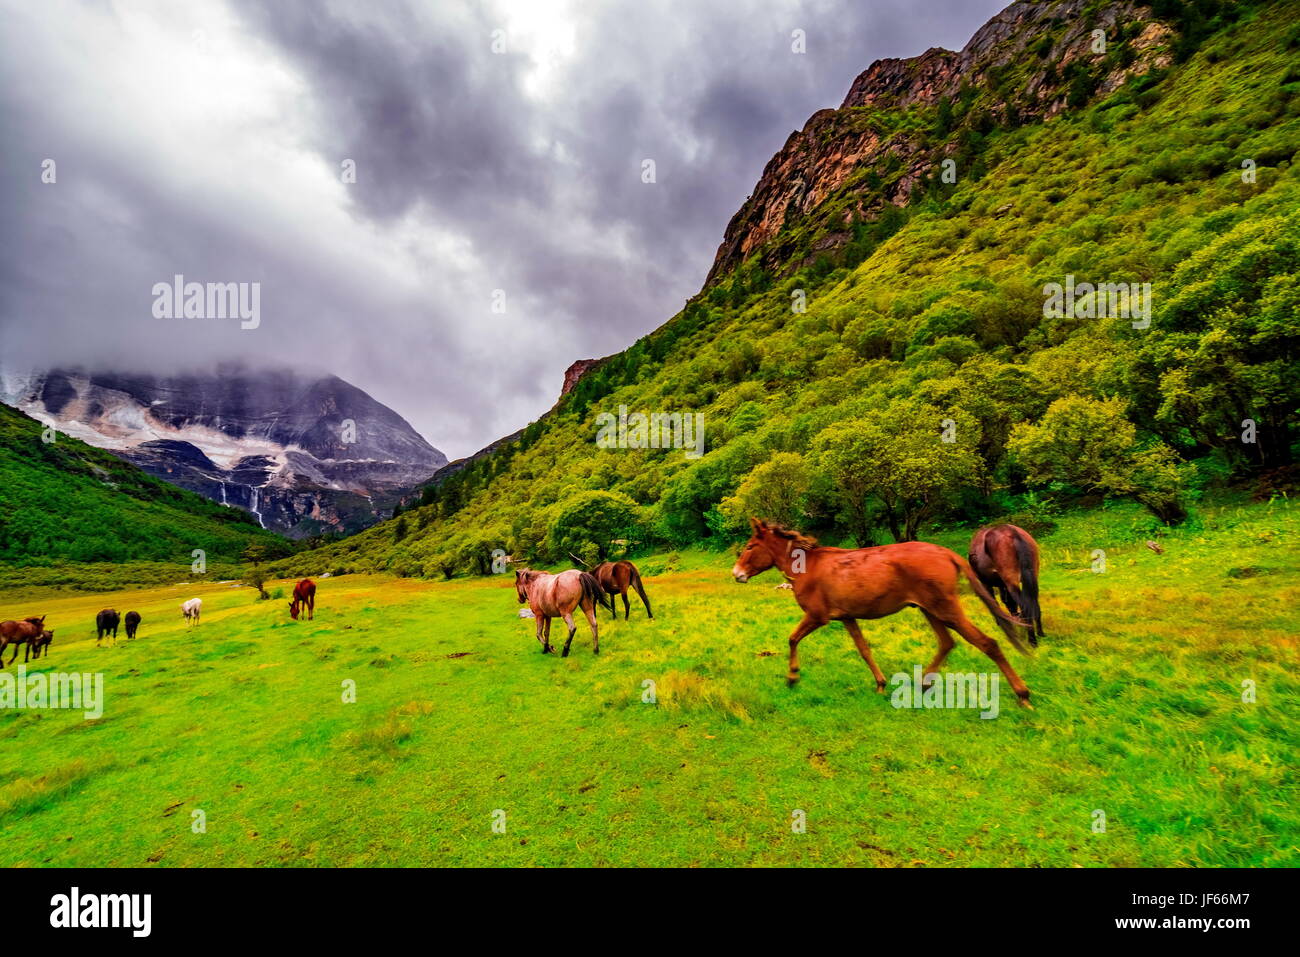 YaDing Naturschutzgebiet. eine berühmte Landschaft in Daocheng, Sichuan, China. Stockfoto